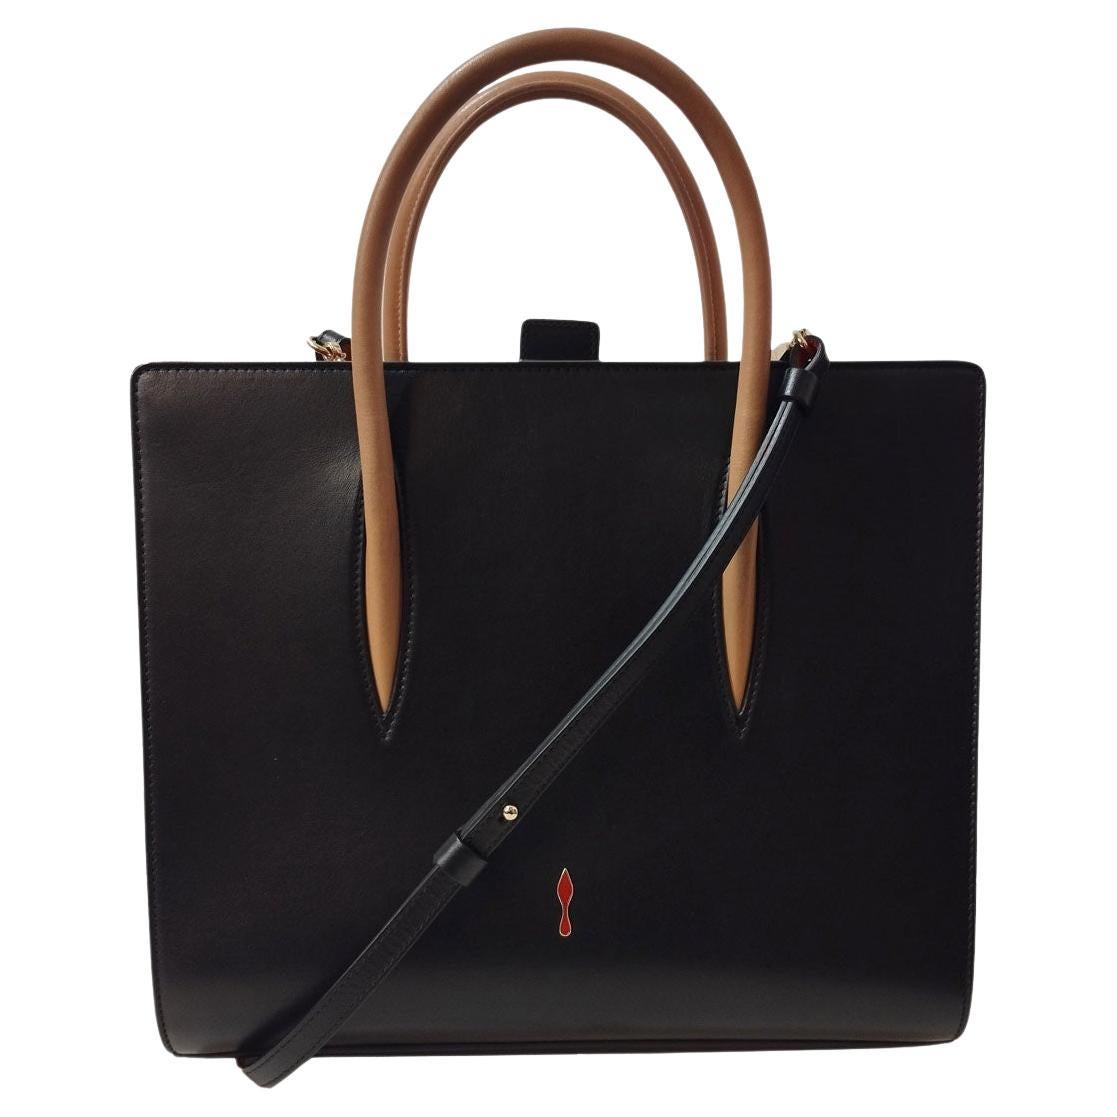 Christian Louboutin "Paloma" handbag size Unica For Sale